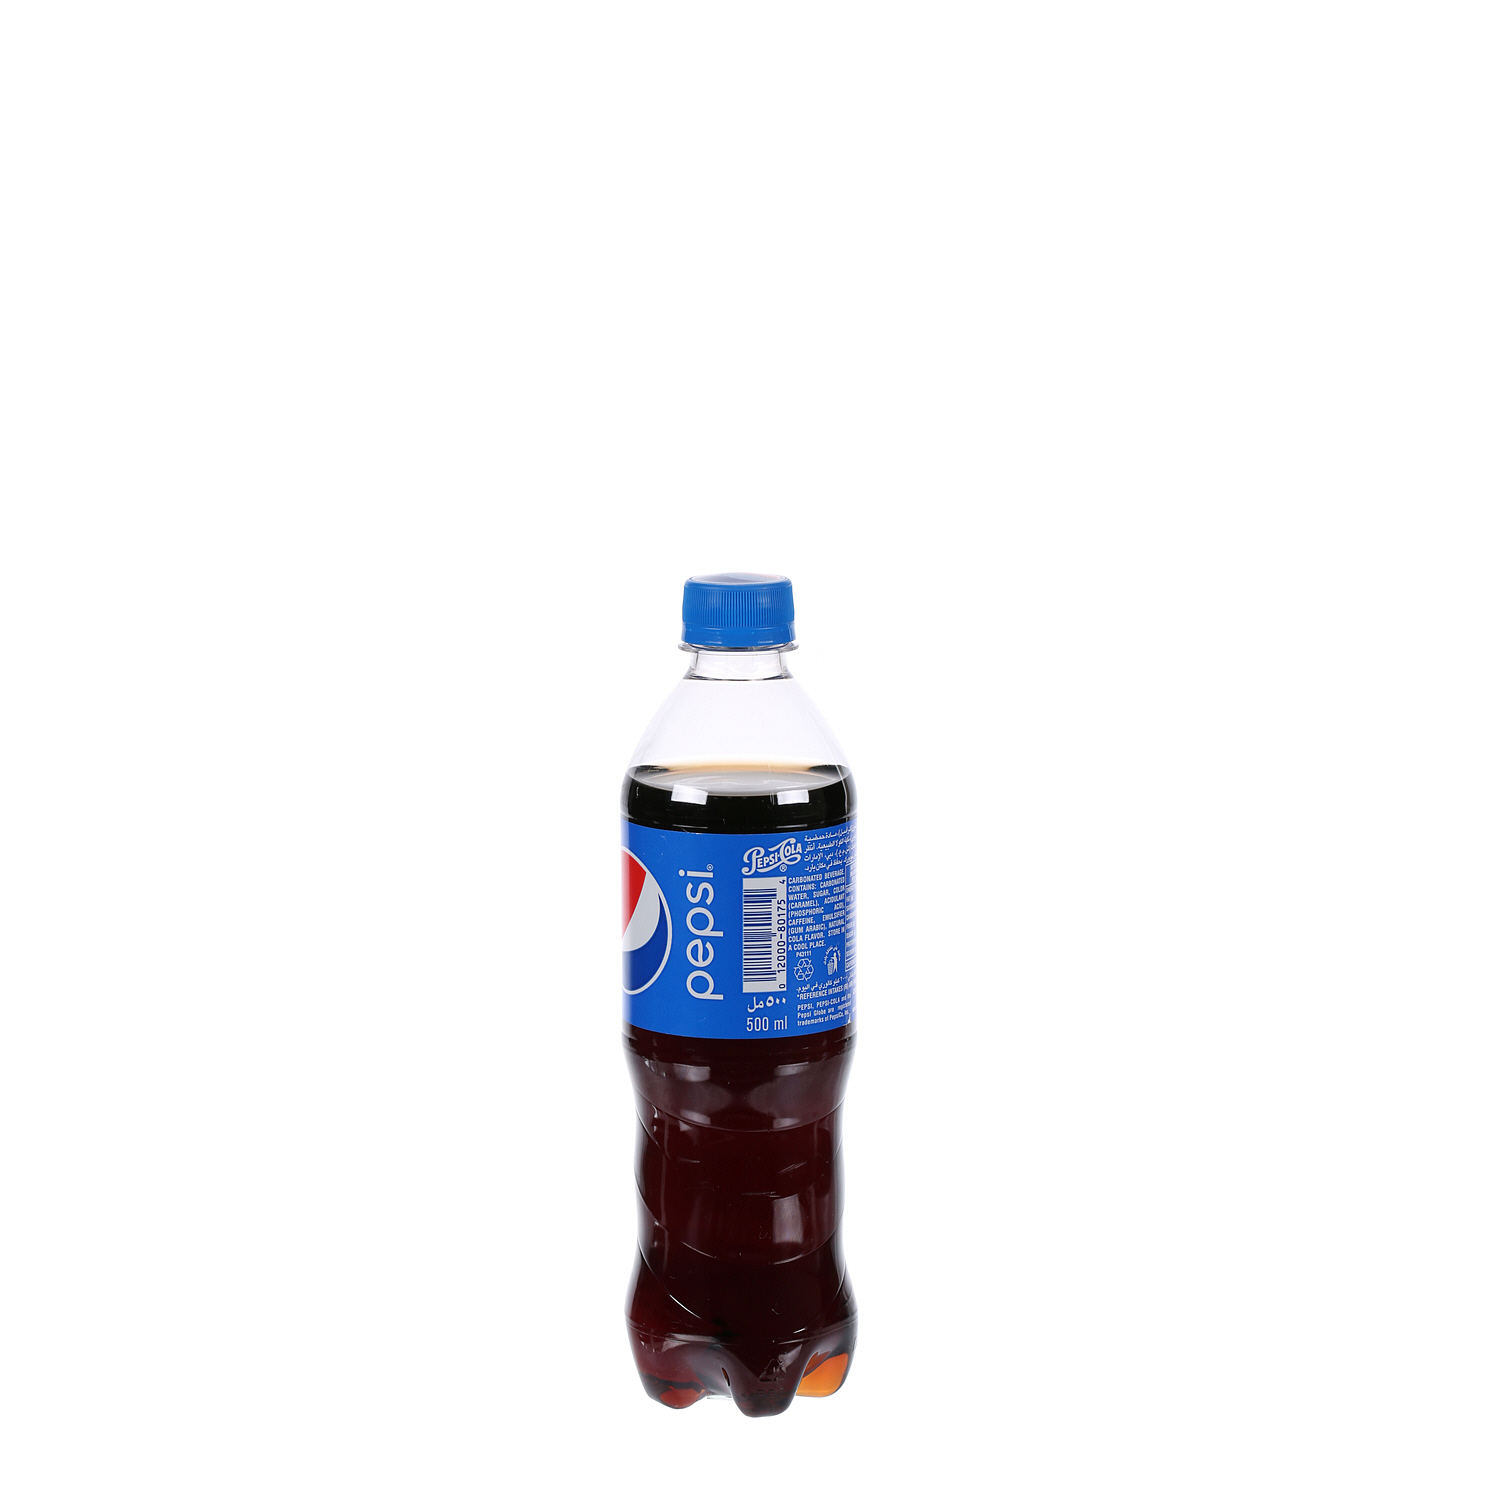 Pepsi Plastic Bottle 500ml